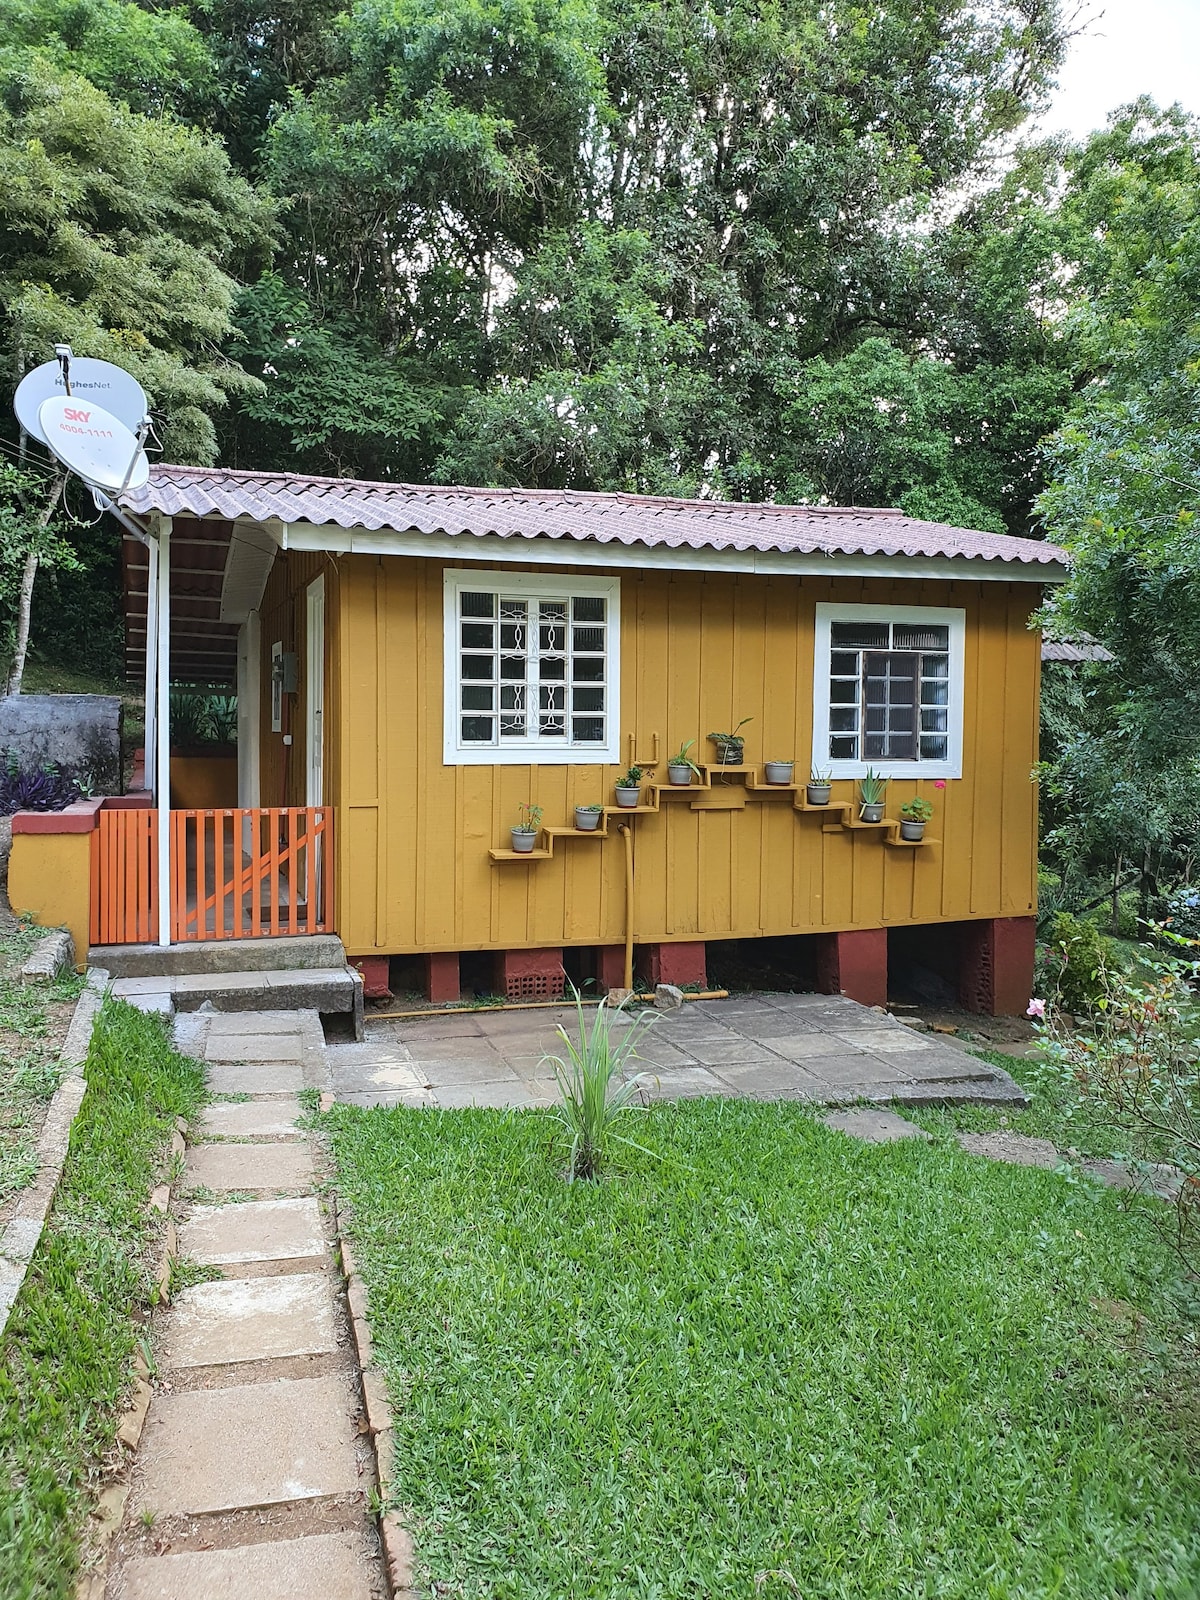 Casa com Jardim e Wi-Fi c/ internet ilimitada.